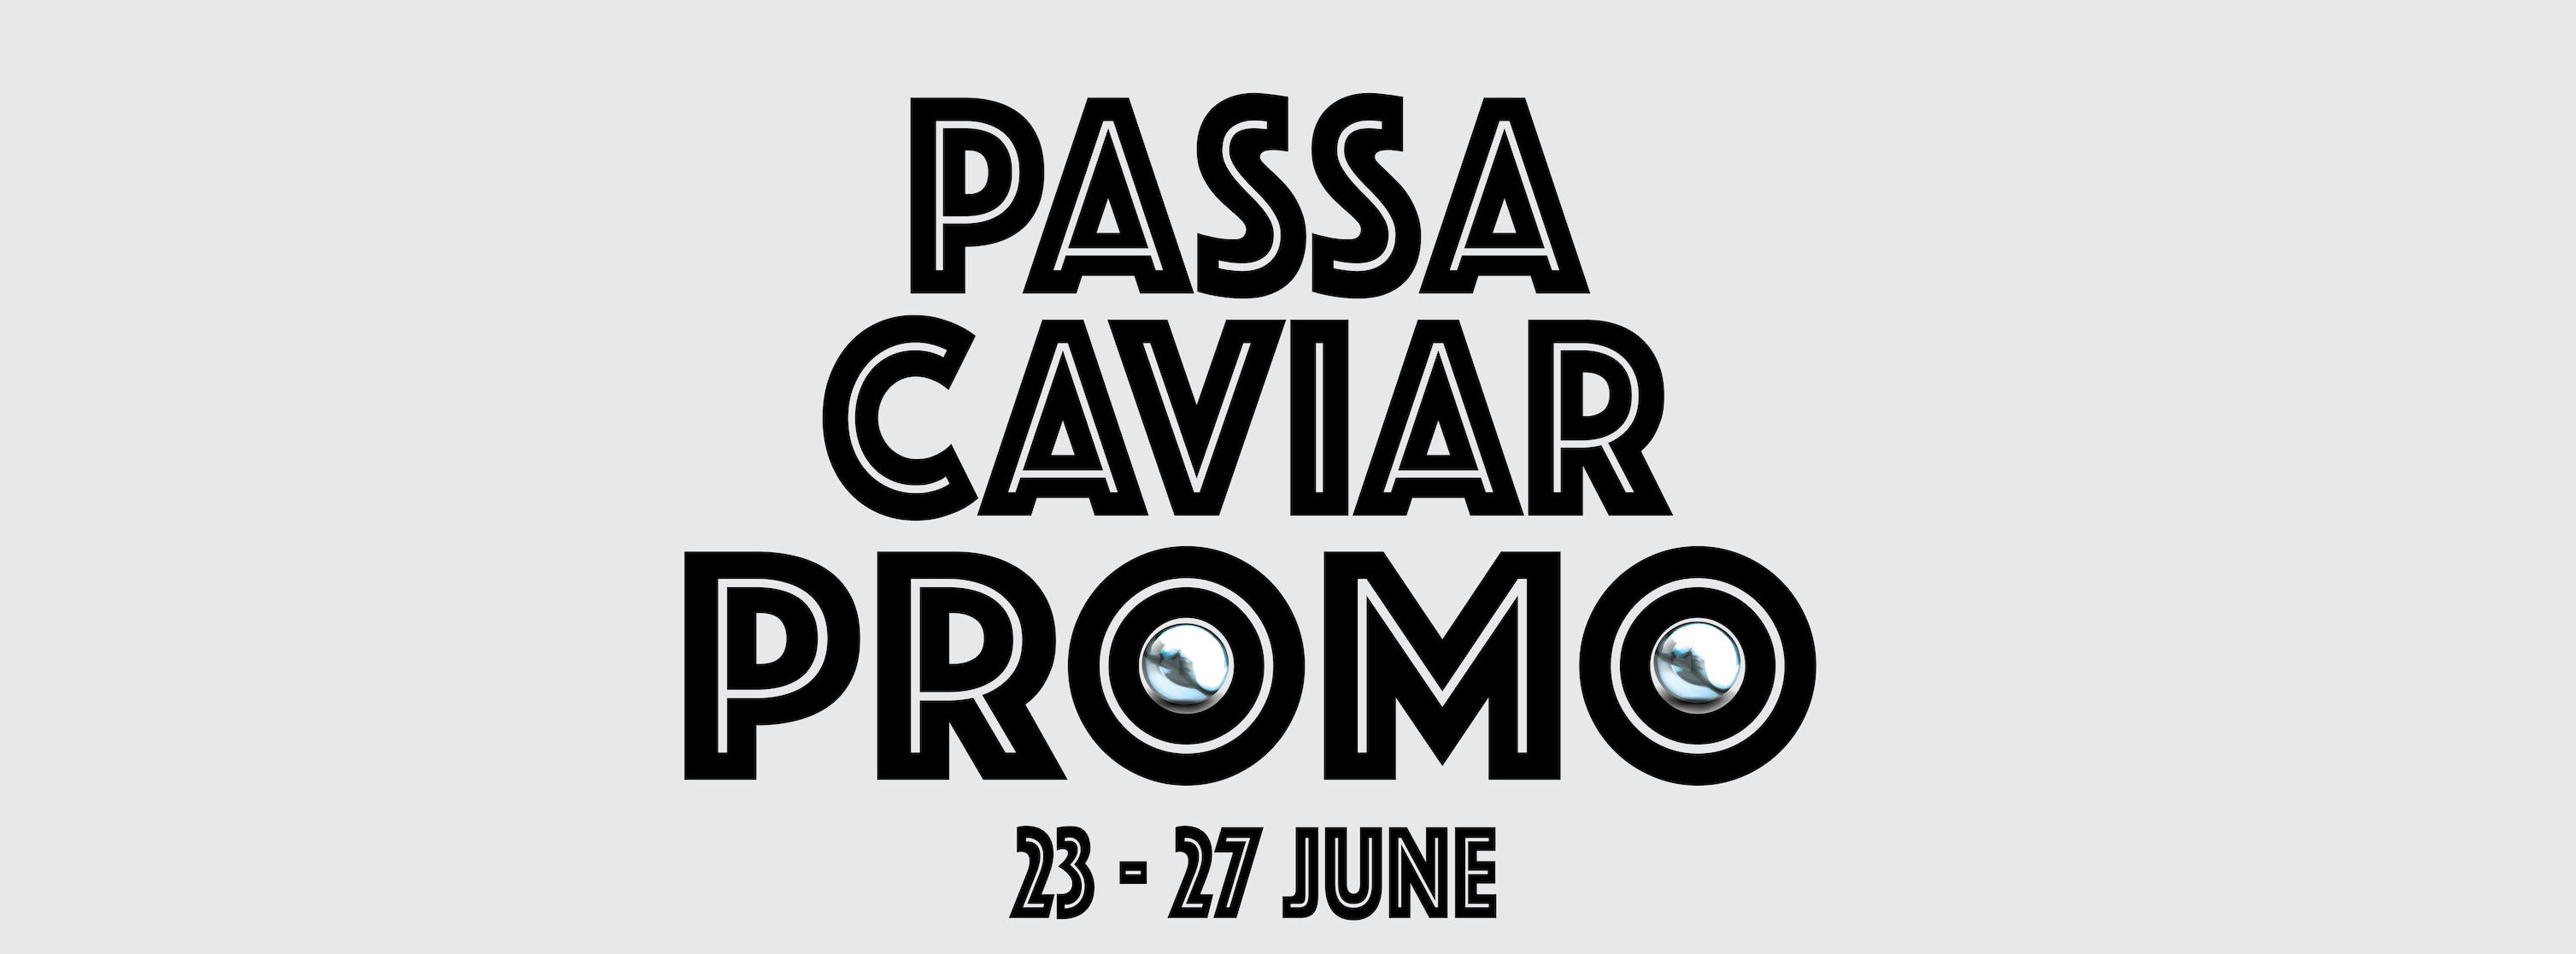 Passa Caviar Promo